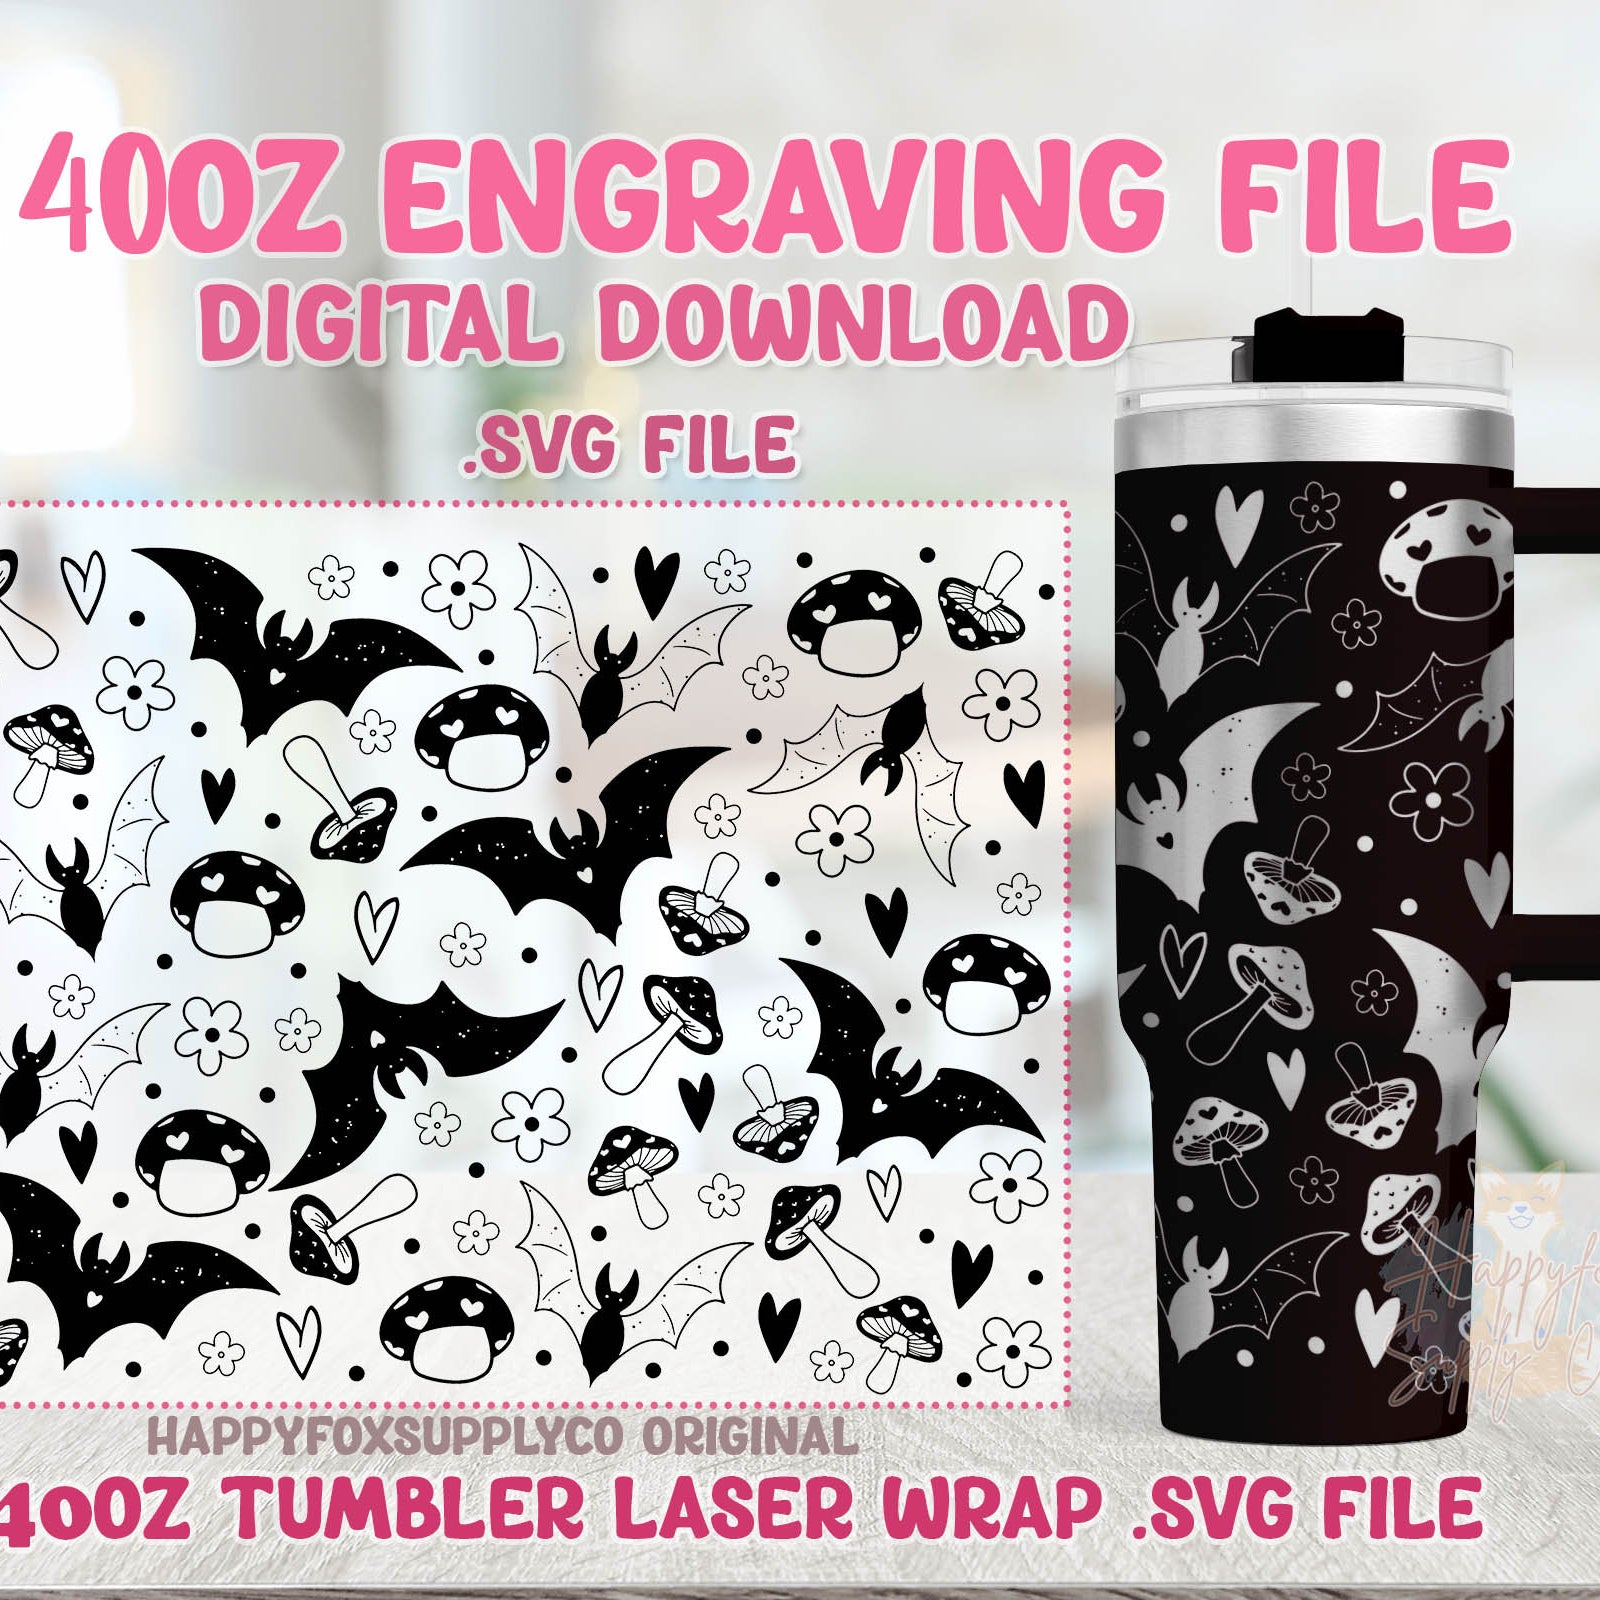 40oz Engraving .SVG File for Lasers Laser Engraved Tumbler Wrap Bats & Mushrooms Hearts Flowers Retro Spooky Cute .SVG Tumbler Wrap